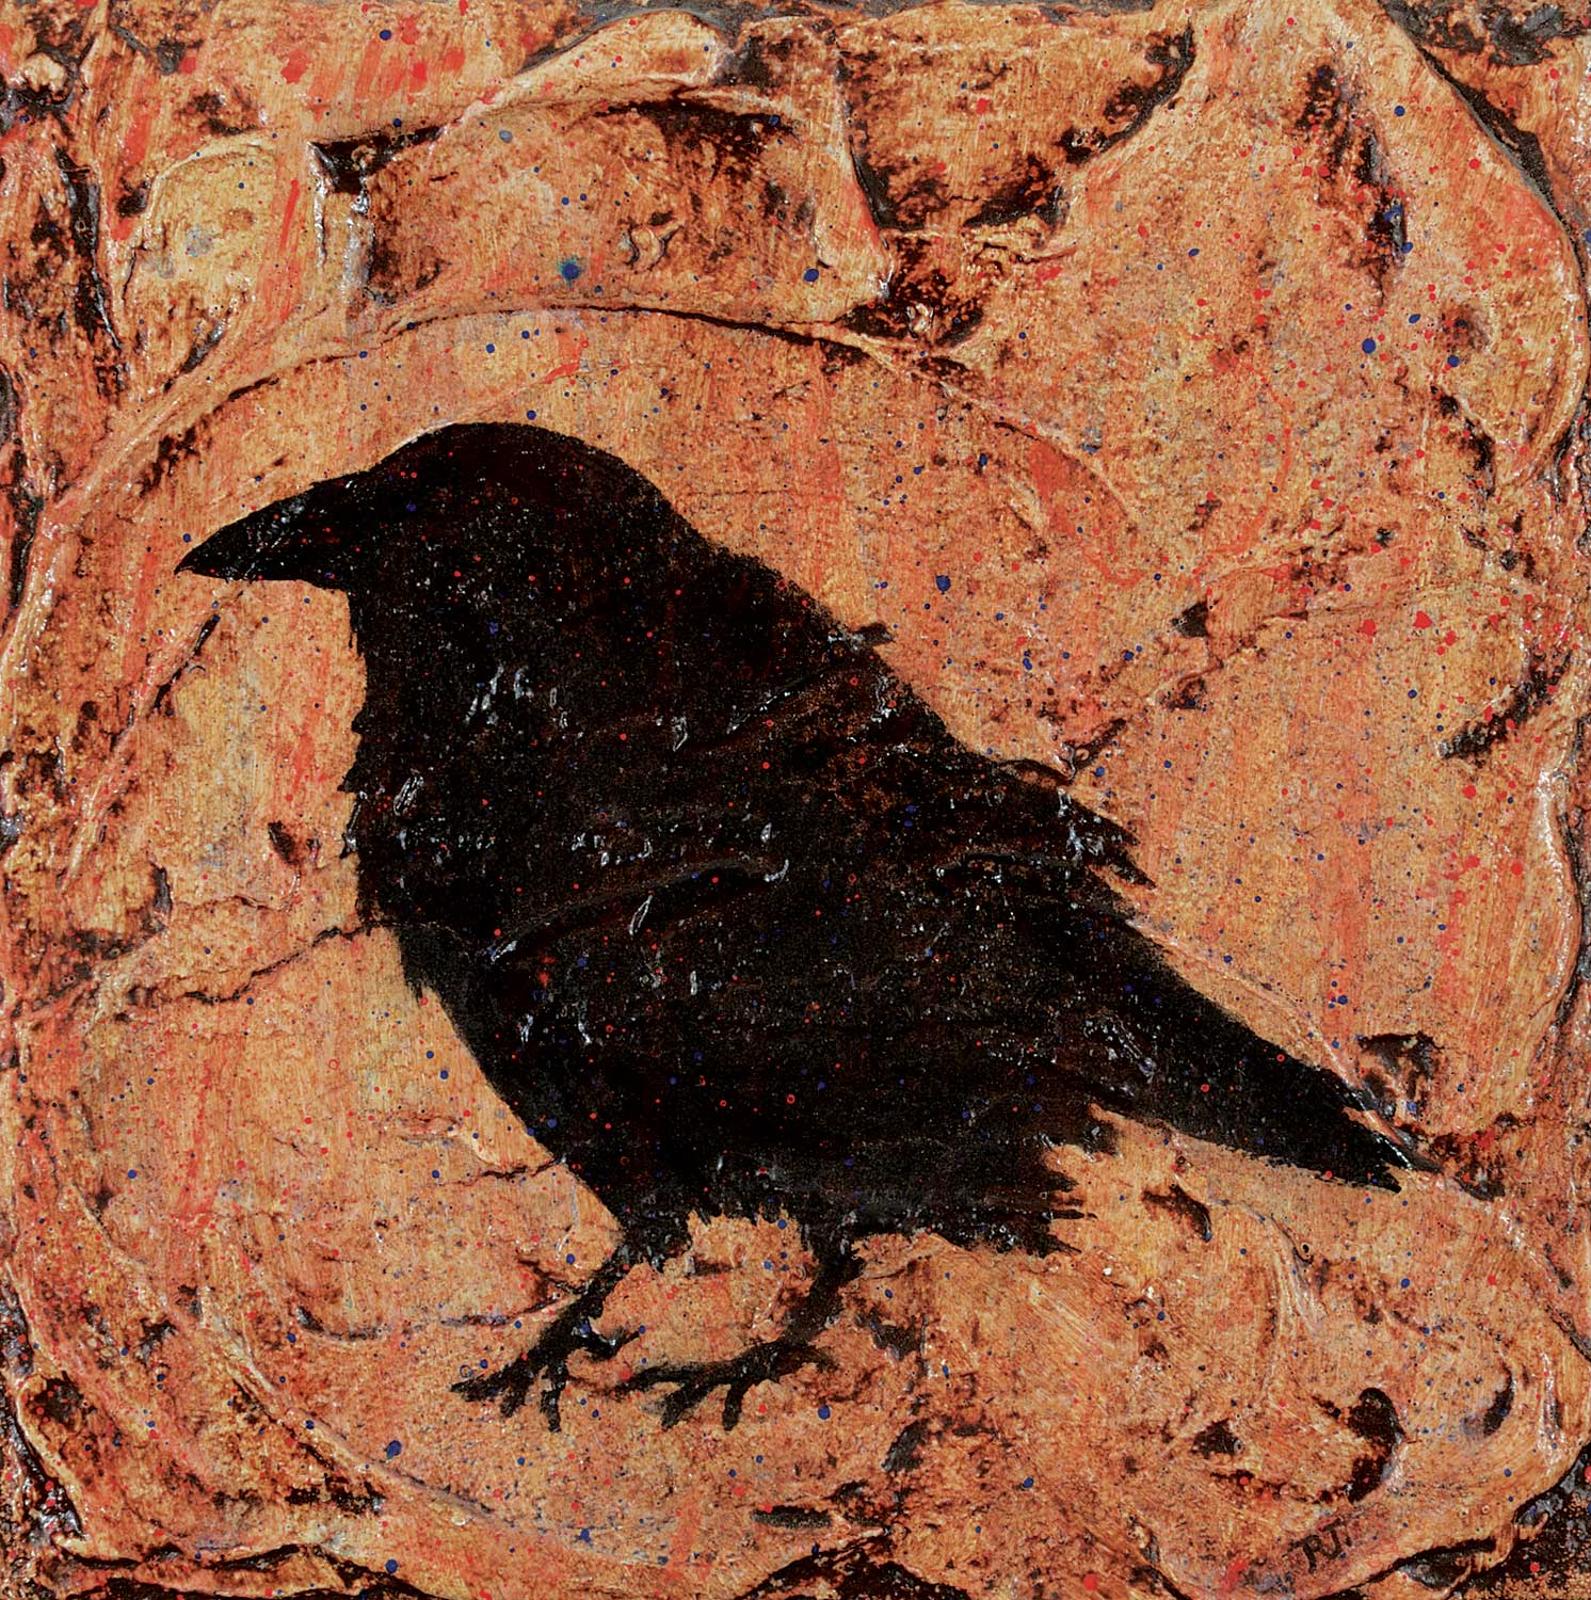 Robert John Hope (1948) - Untitled - The Crow